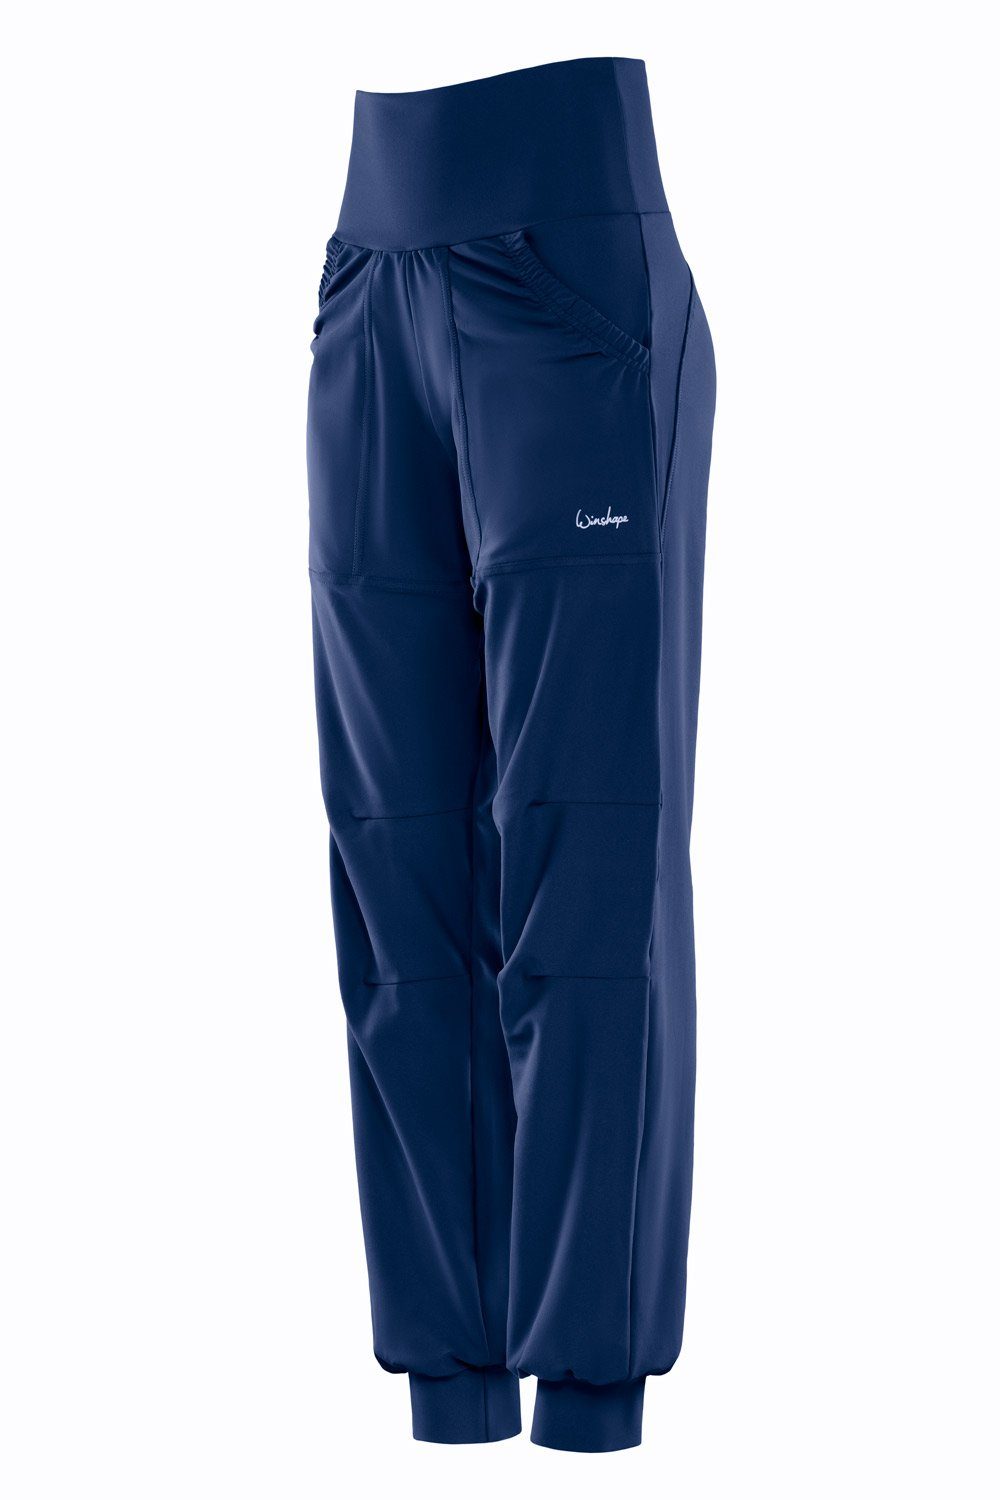 High Sporthose Trousers Winshape Time LEI101C Waist dark Comfort blue Functional Leisure